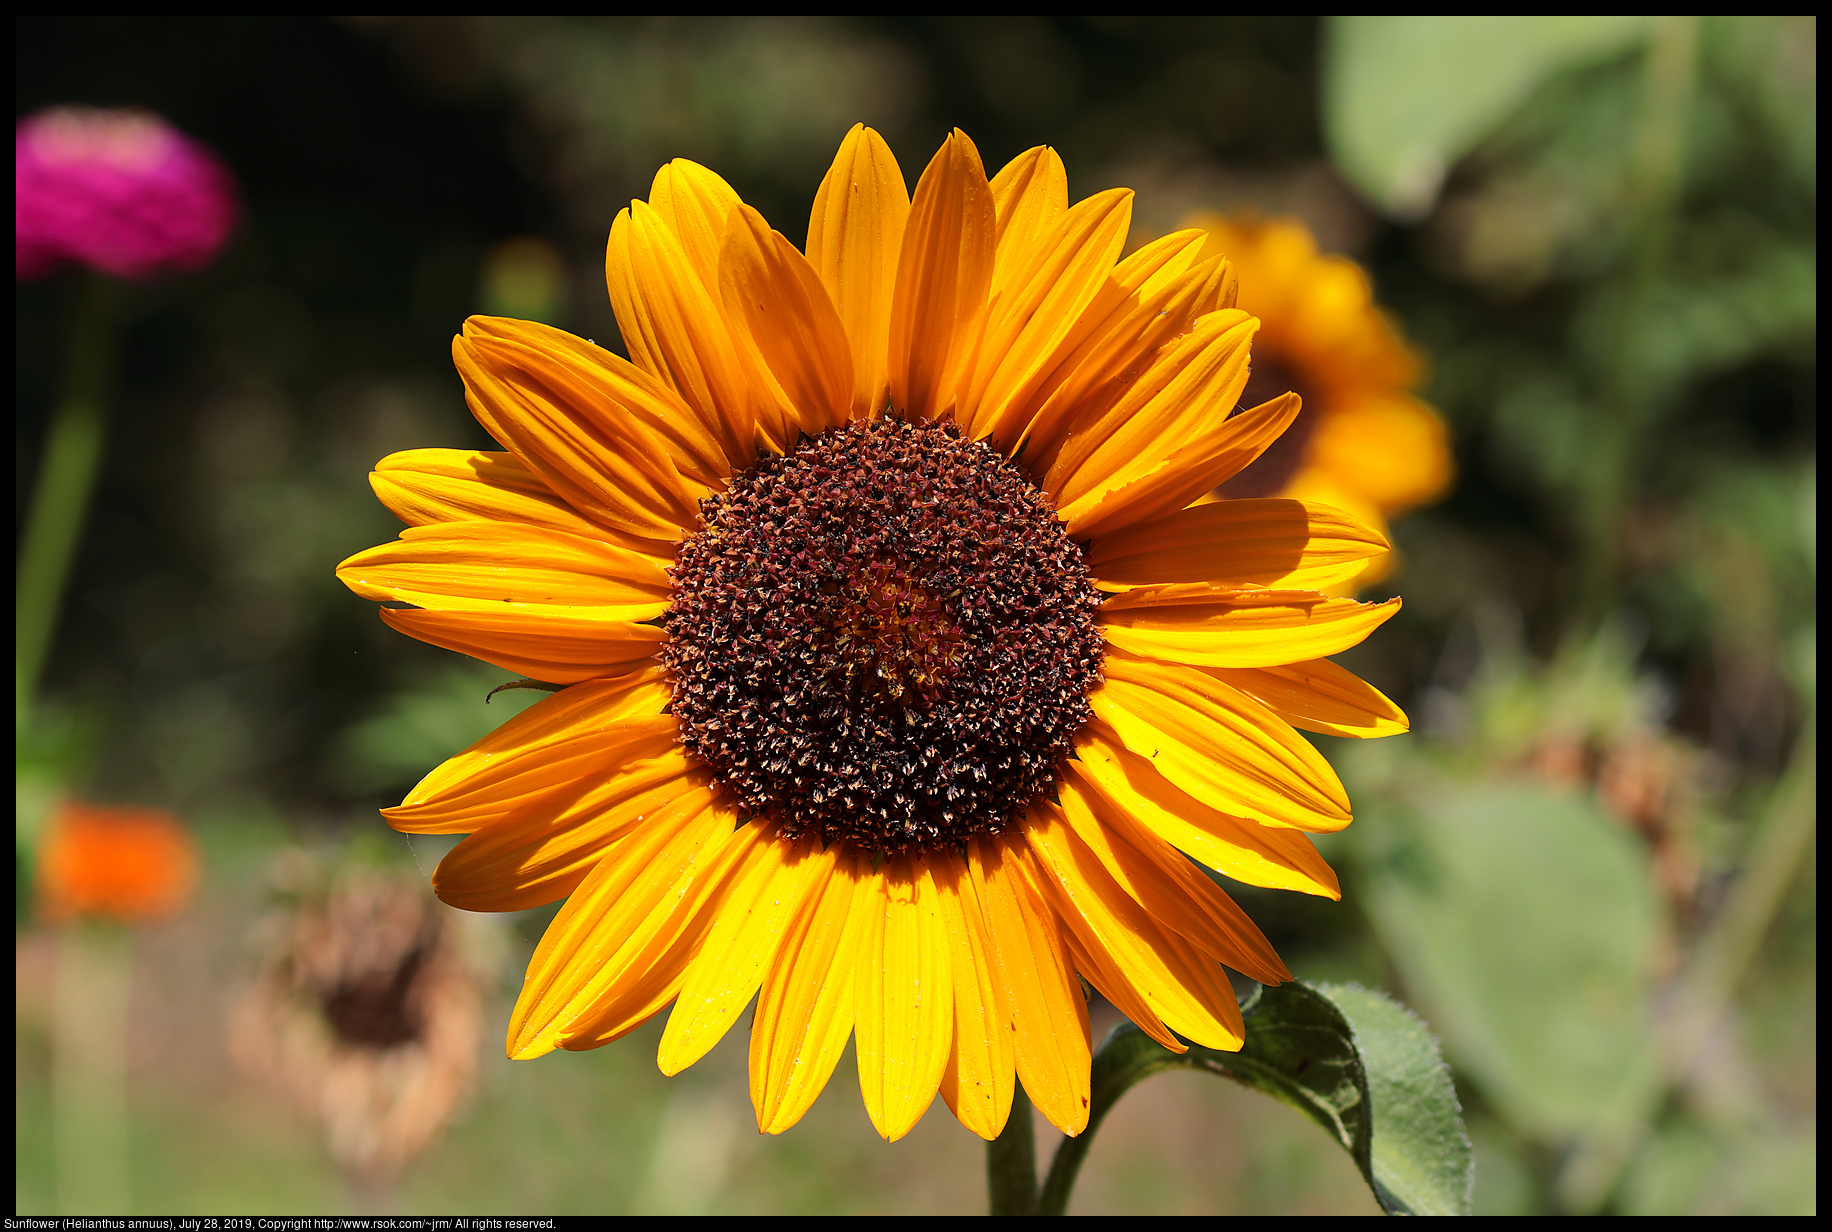 Sunflower (Helianthus annuus), July 28, 2019